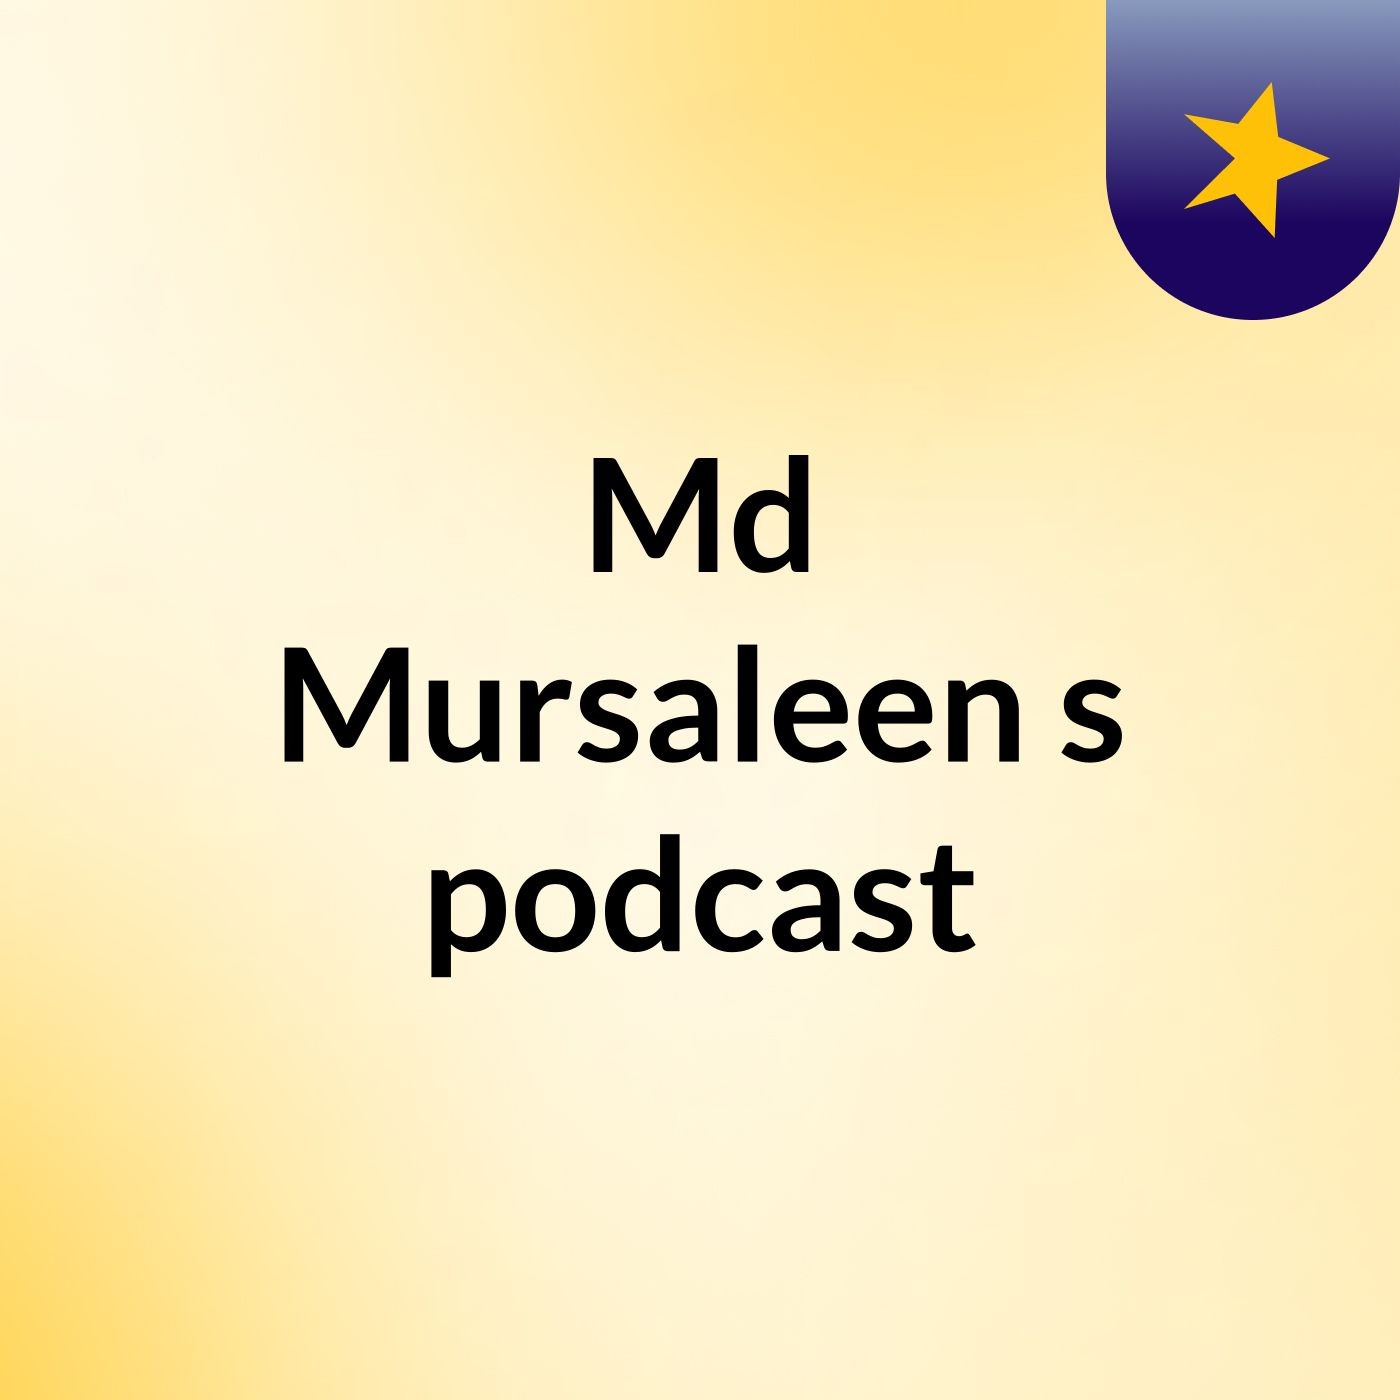 Episode 2 - Md Mursaleen's podcast